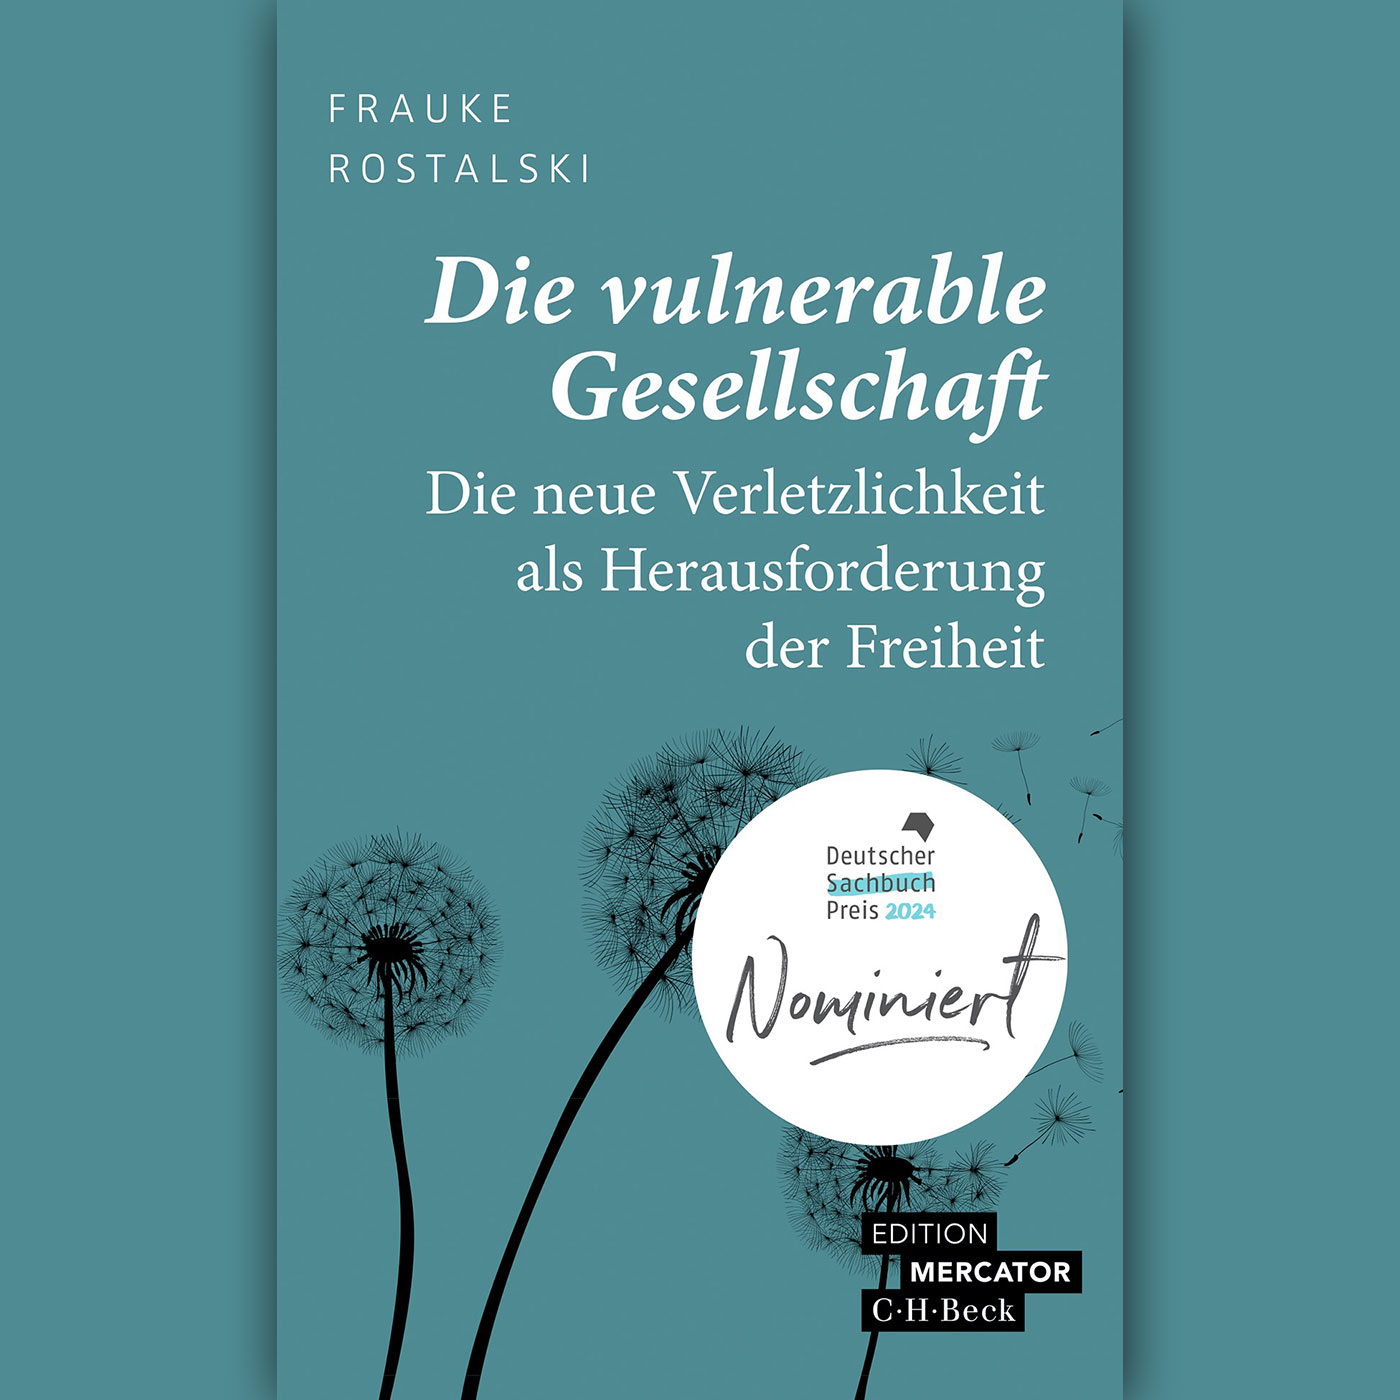 Frauke Rostalski: "Die vulnerable Gesellschaft"